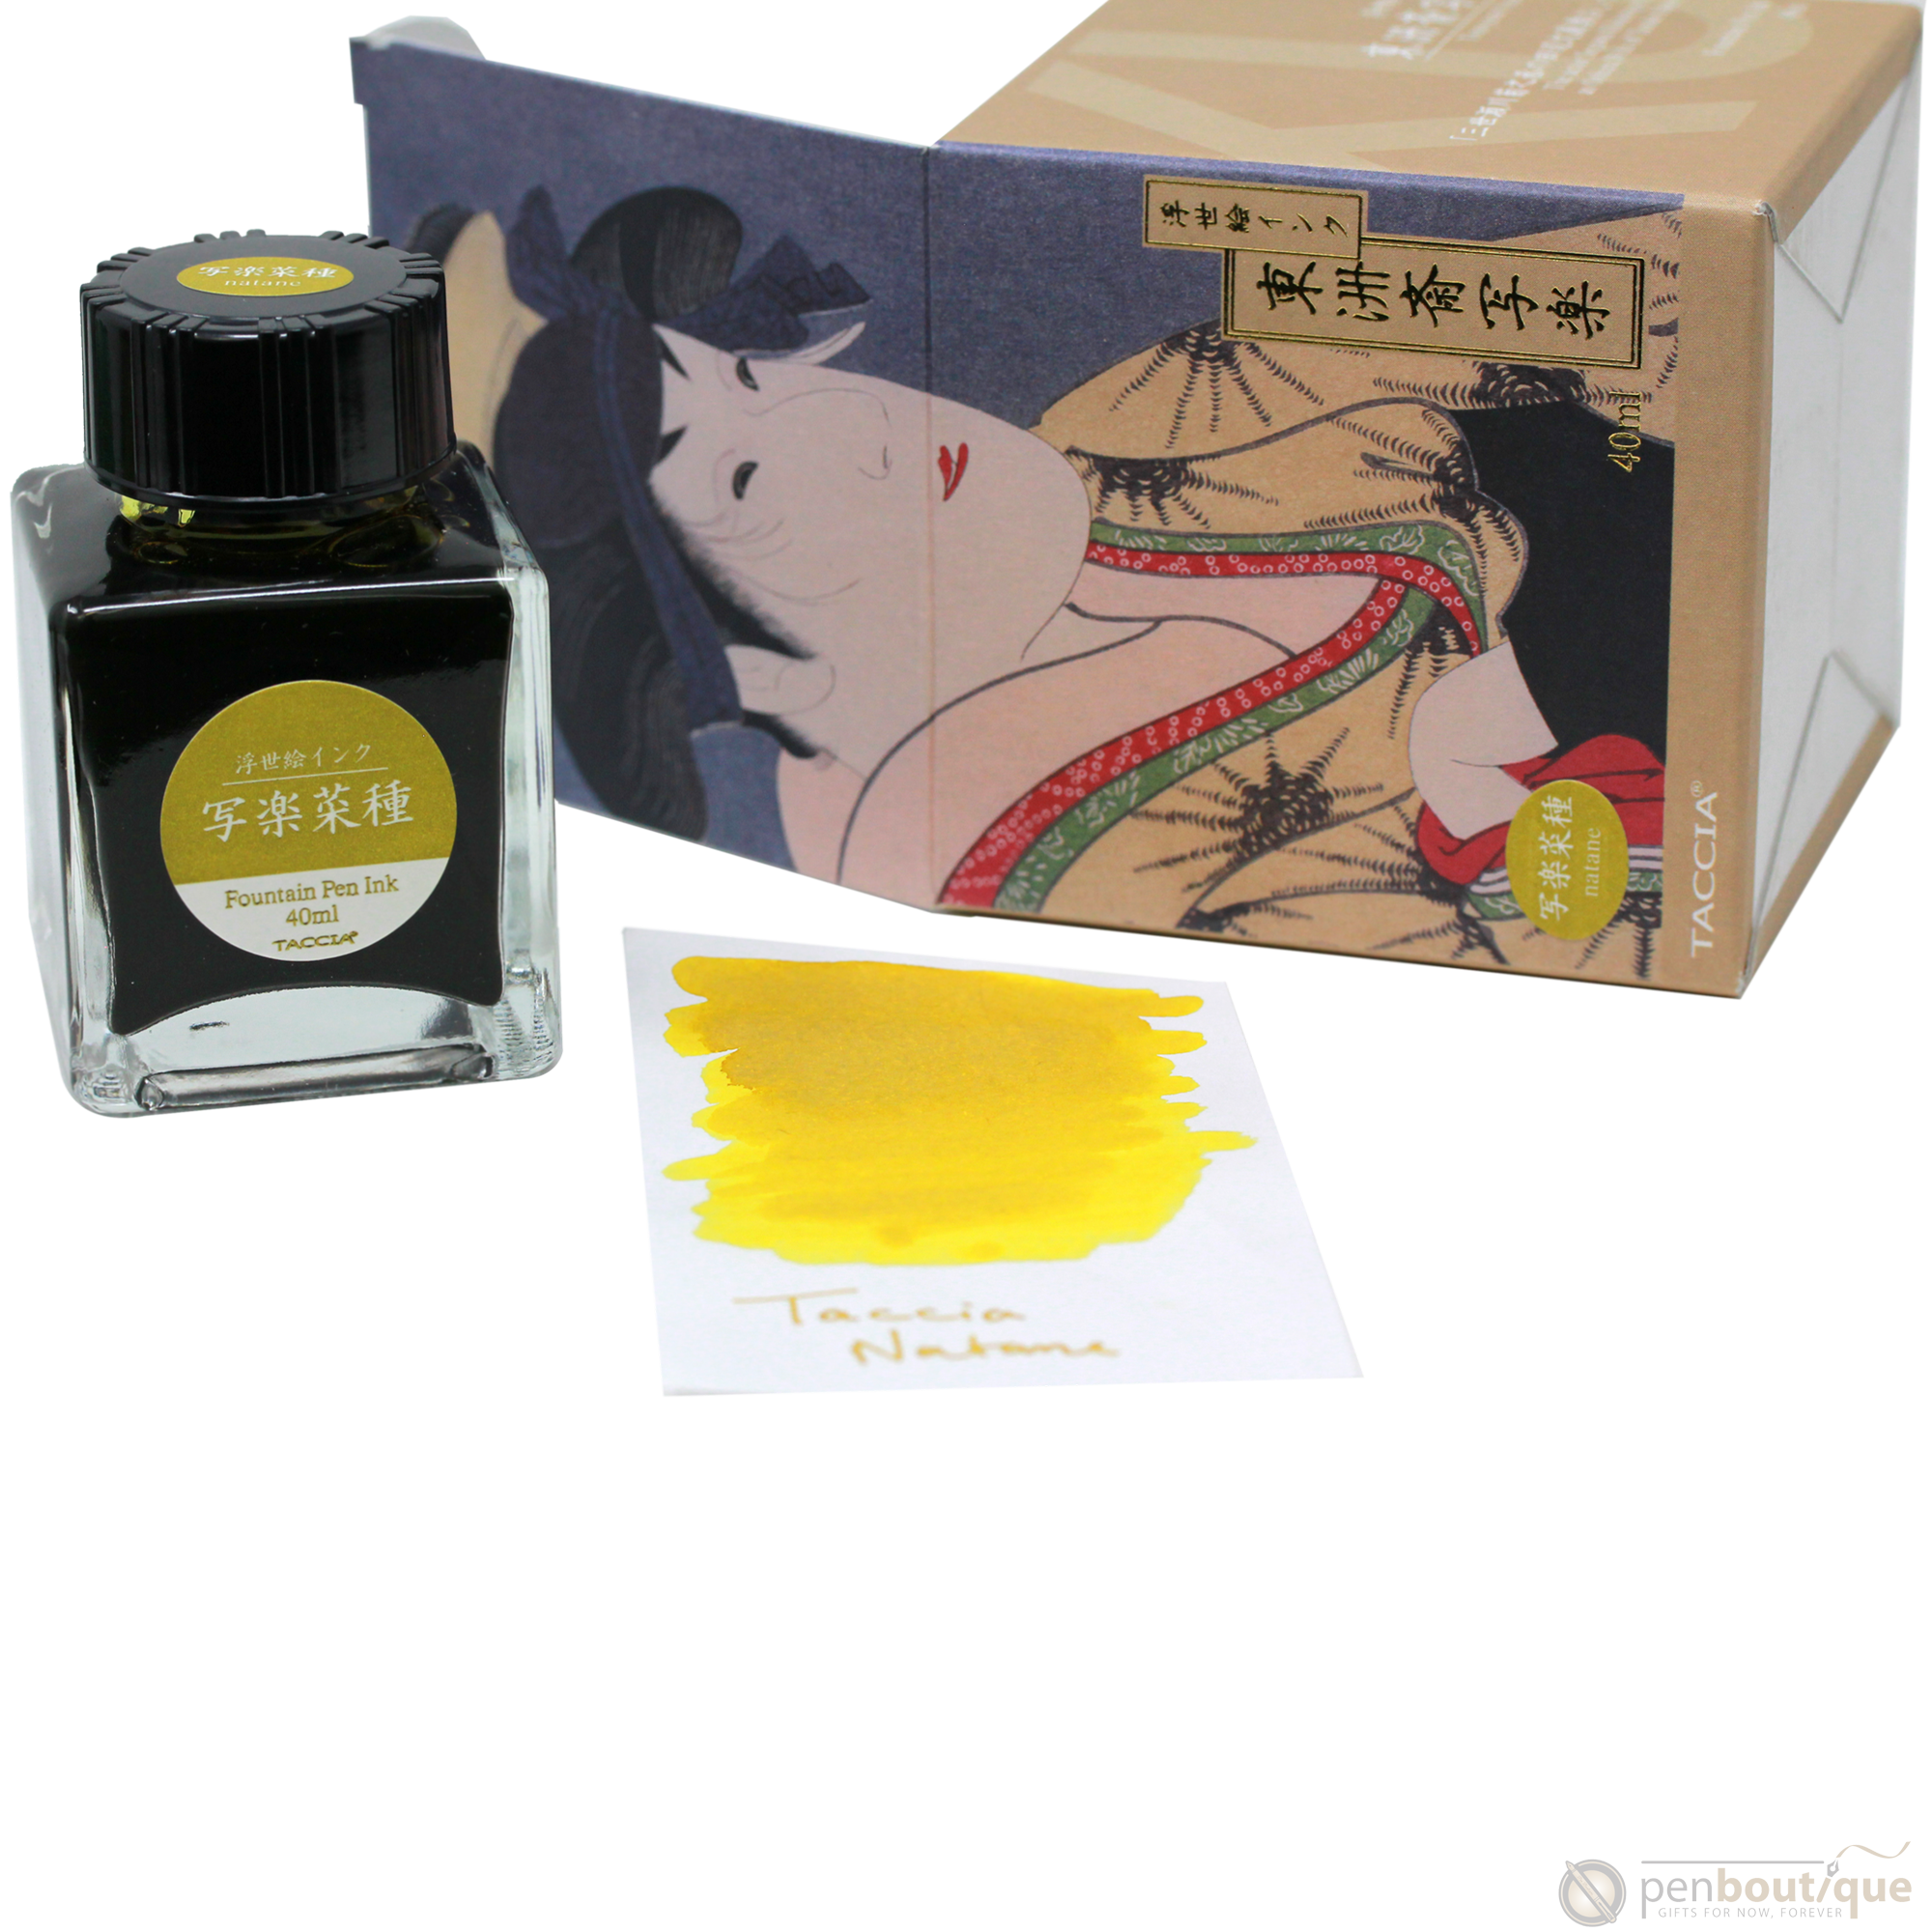 Taccia Ukiyo-e Ink Bottle - 40 ml-Pen Boutique Ltd